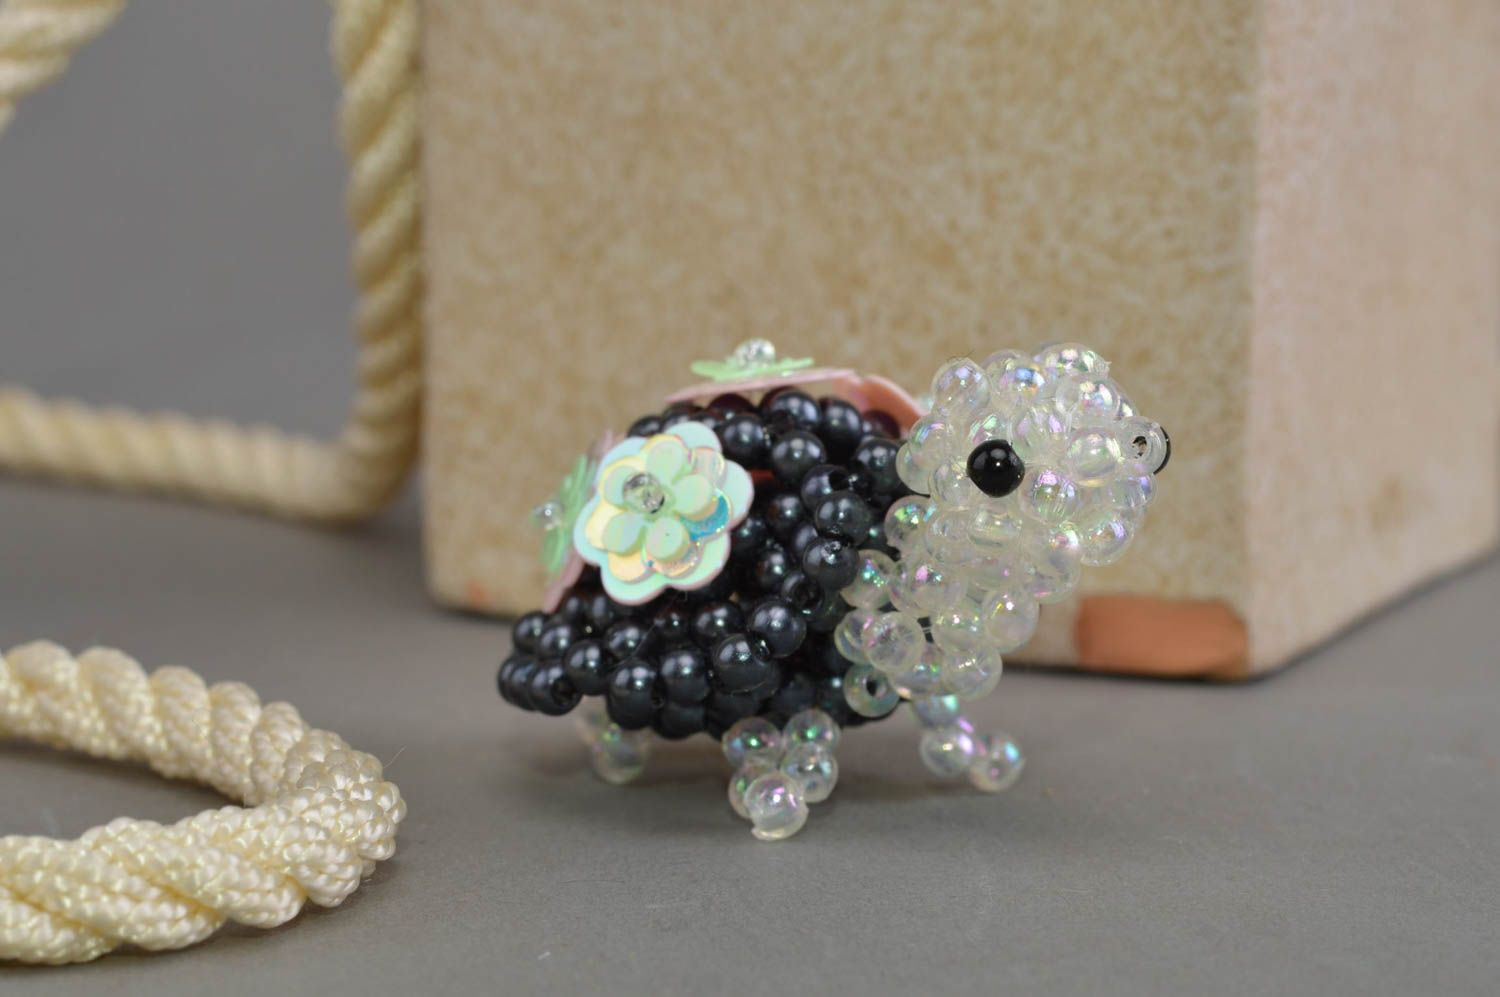 Handmade miniature figurine woven of beads small turtle interior decoration photo 1